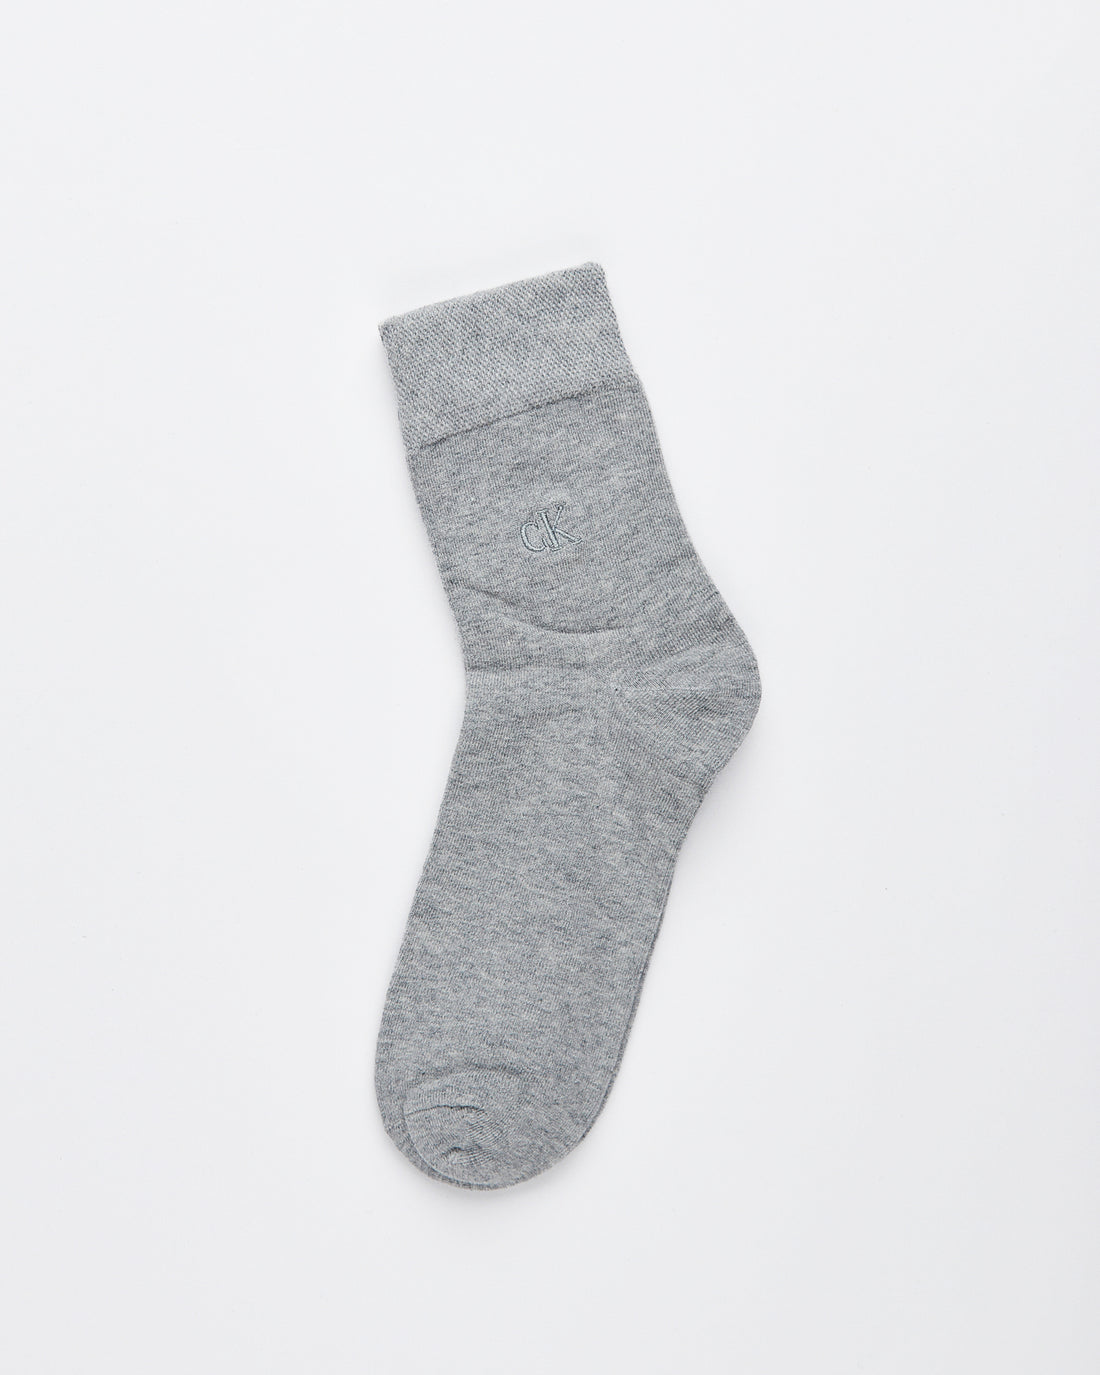 CK Grey 1 Pairs Quarter Socks 2.50